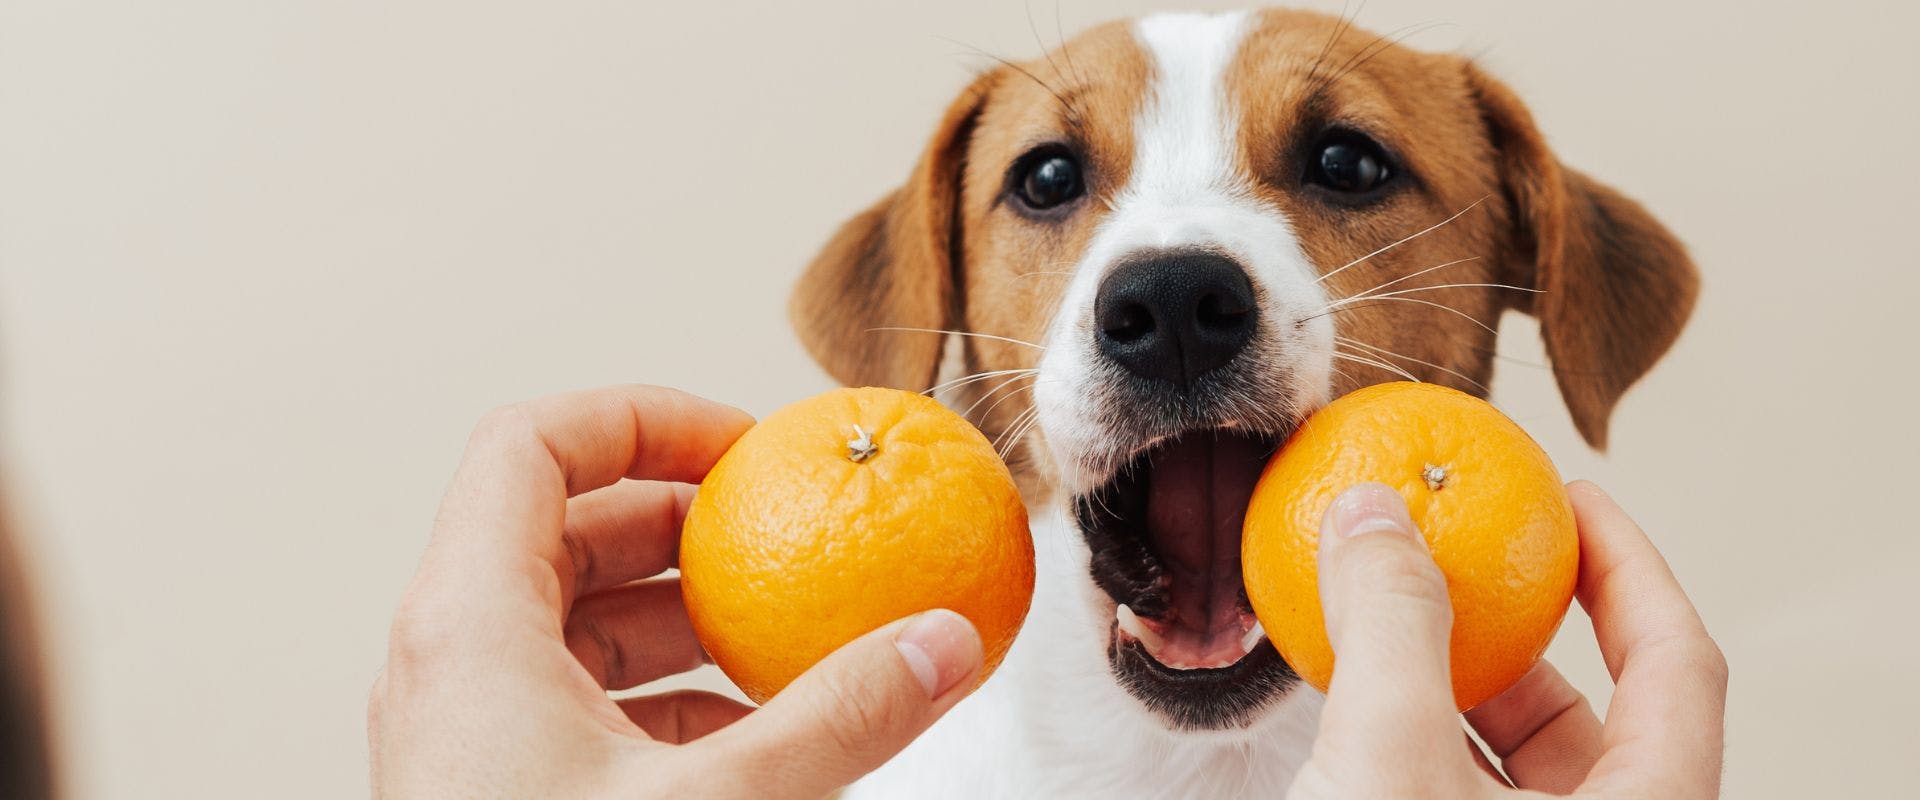 Jack Russell dog eating oranges